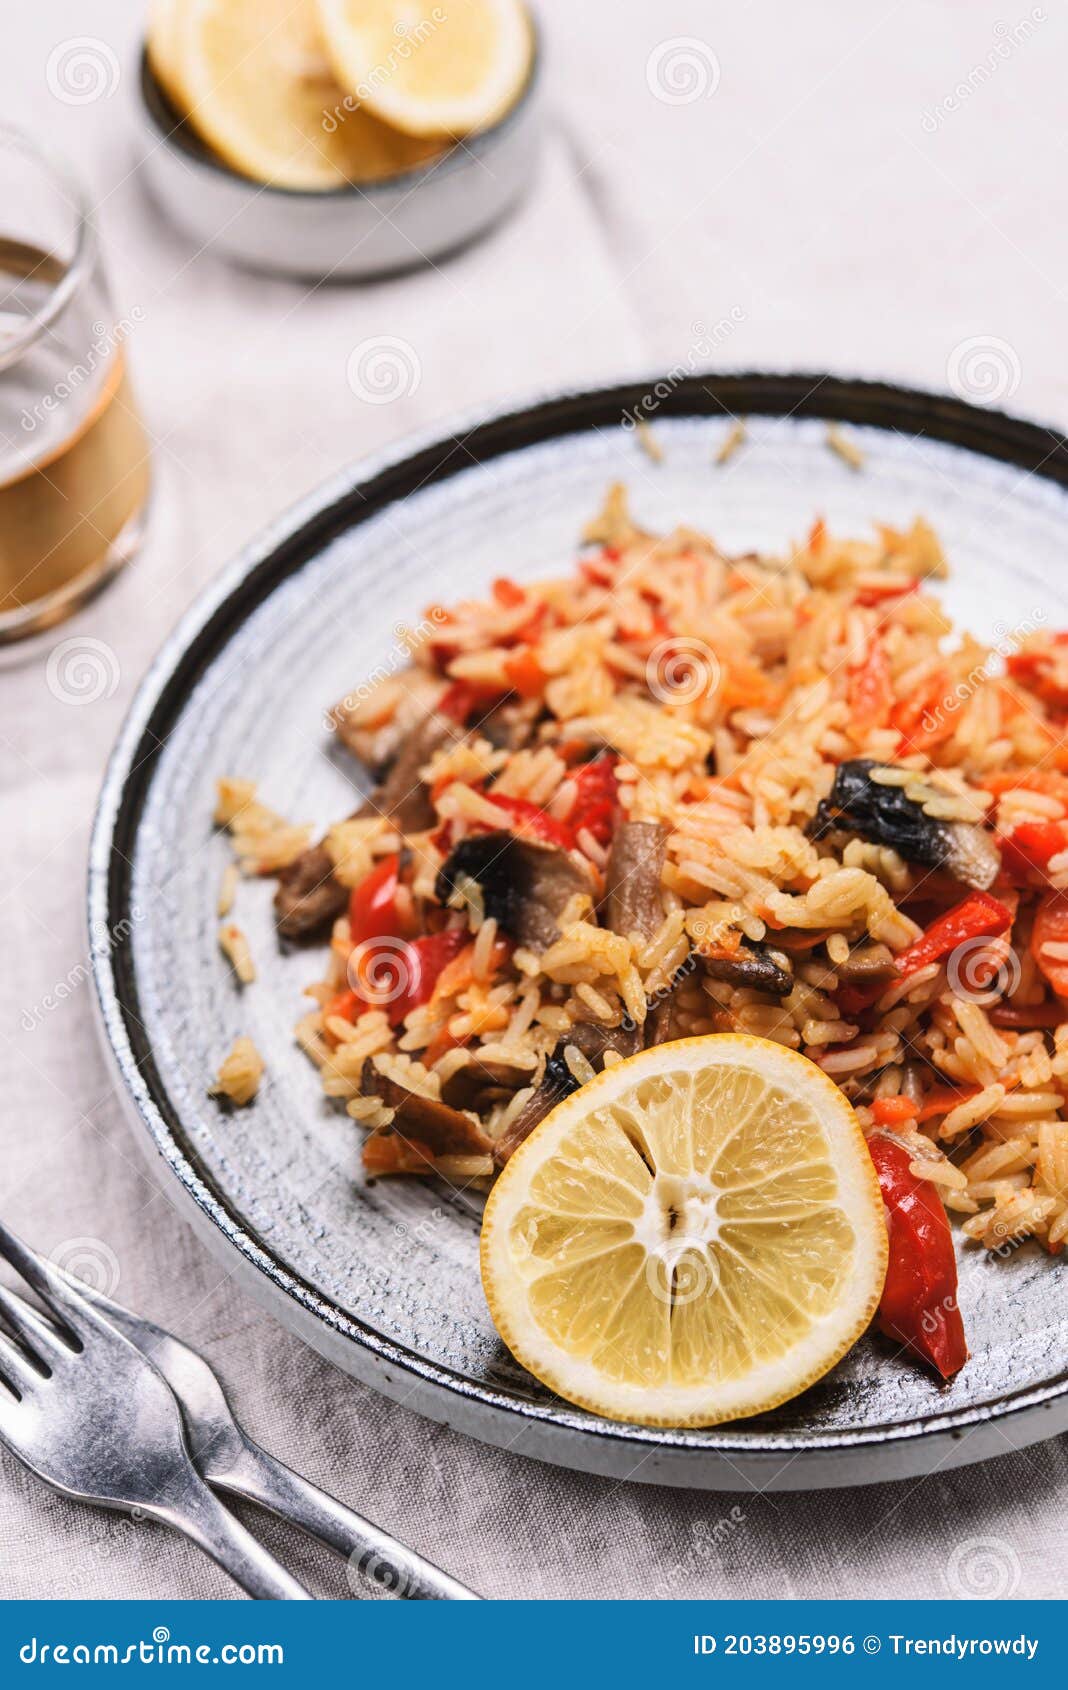 arroz con verduras y azafran, spanish dish. vegetarian risotto with vegetables, champignons and saffron